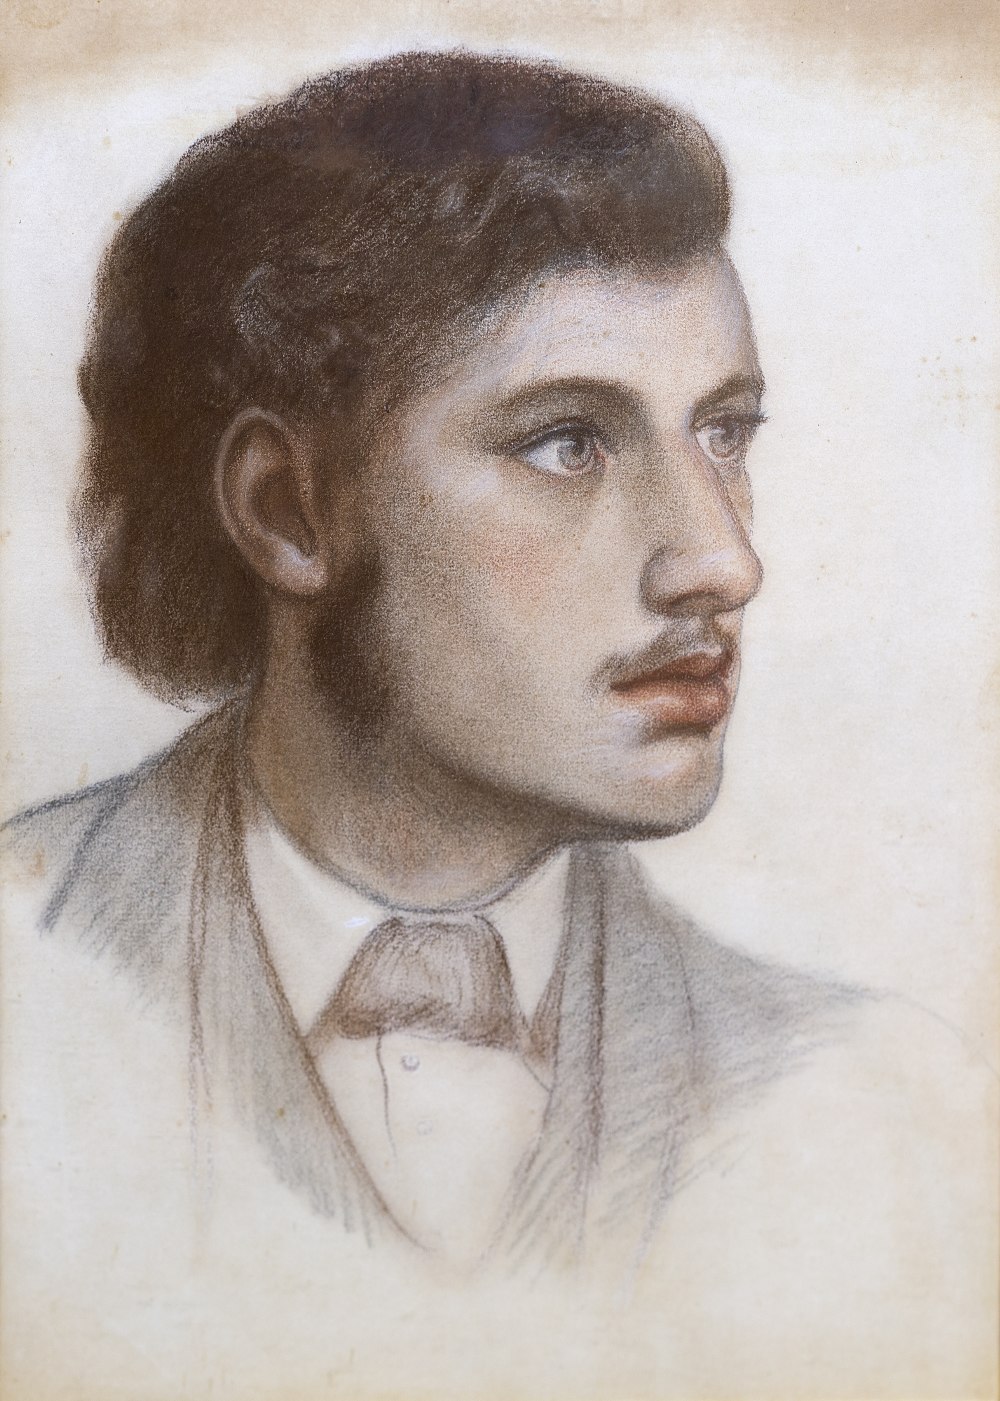 275 - DANTE GABRIEL ROSSETTI (1828-1882)